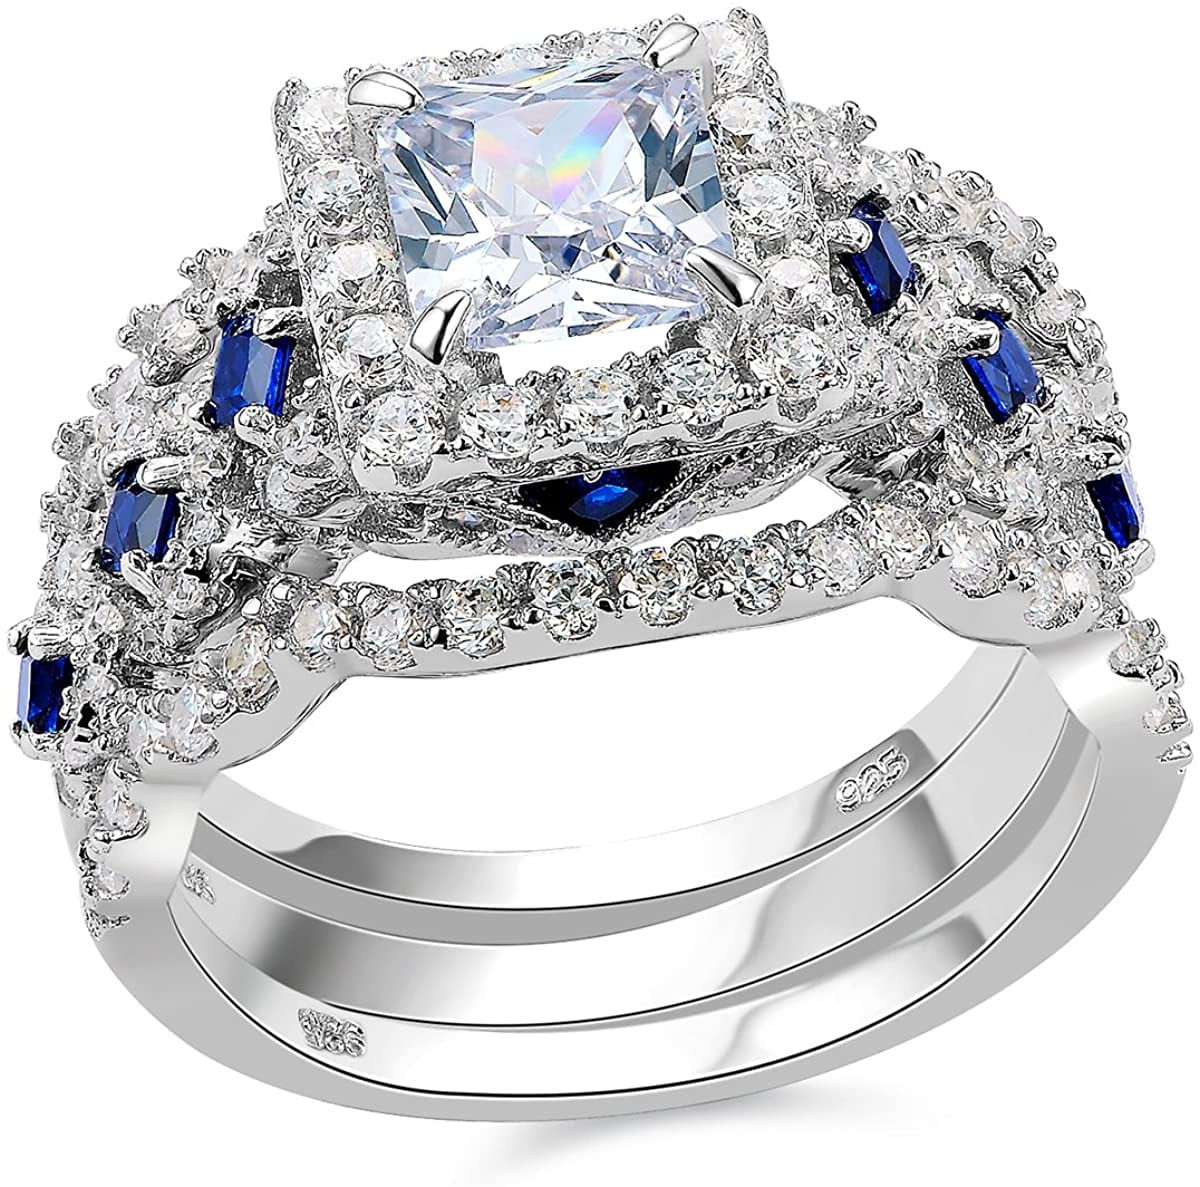 2.25ct Blue Princess Cut Diamond Engagement Wedding Ring Set 925 Sterling Silver 